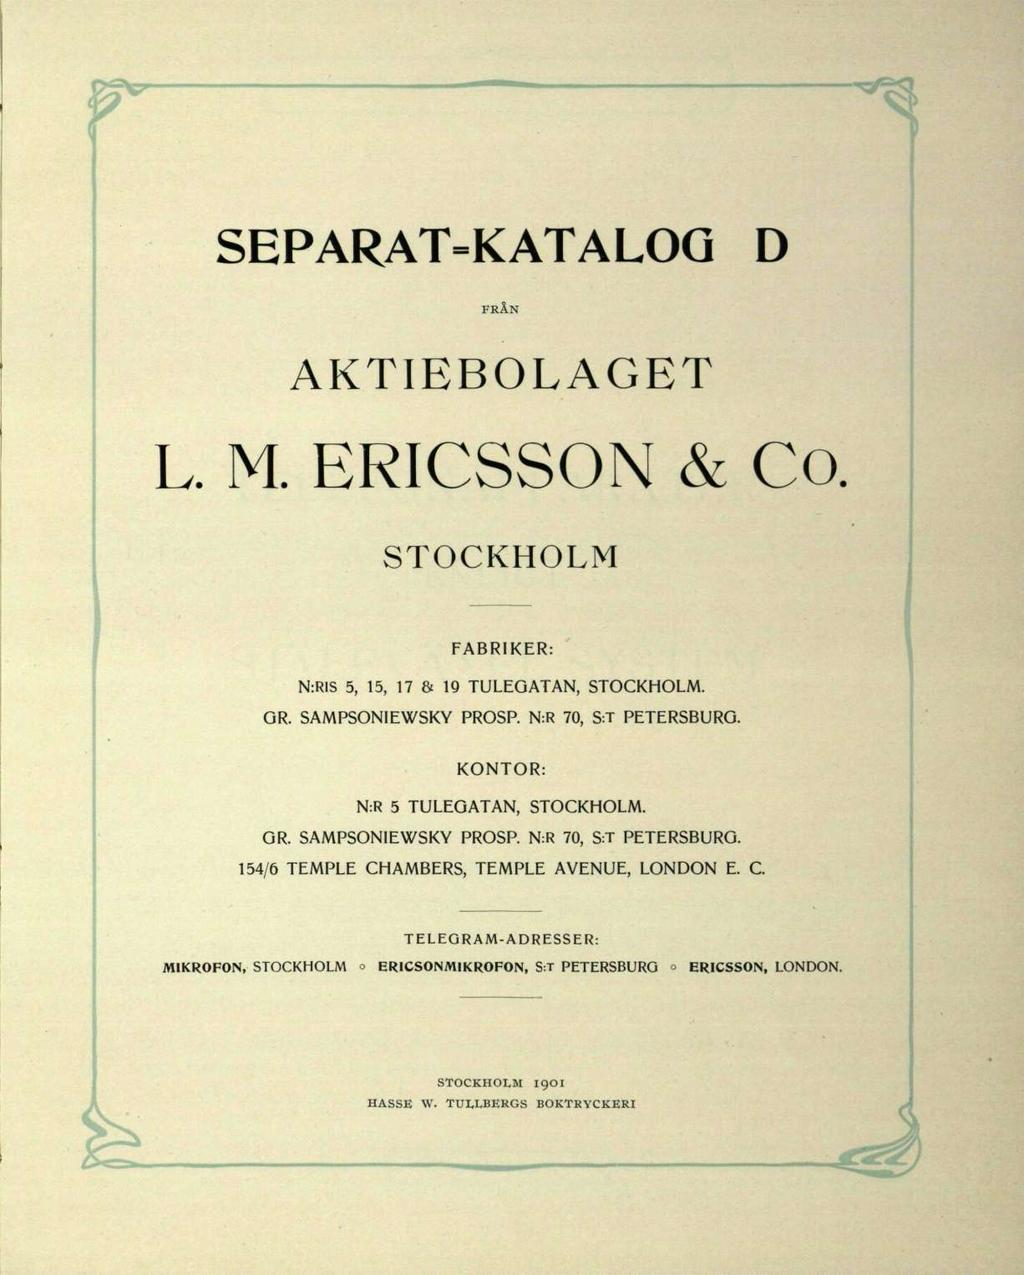 SEPARAT=KATALOG D FRÅN AKTIEBOLAGET L. M. ERICSSON & Co. STOCKHOLM FABRIKER: N:RIS 5, 15, 17 & 19 TULEGATAN, STOCKHOLM. OR. SAMPSONIEWSKY PROSP. N:R 70, S:T PETERSBURG.